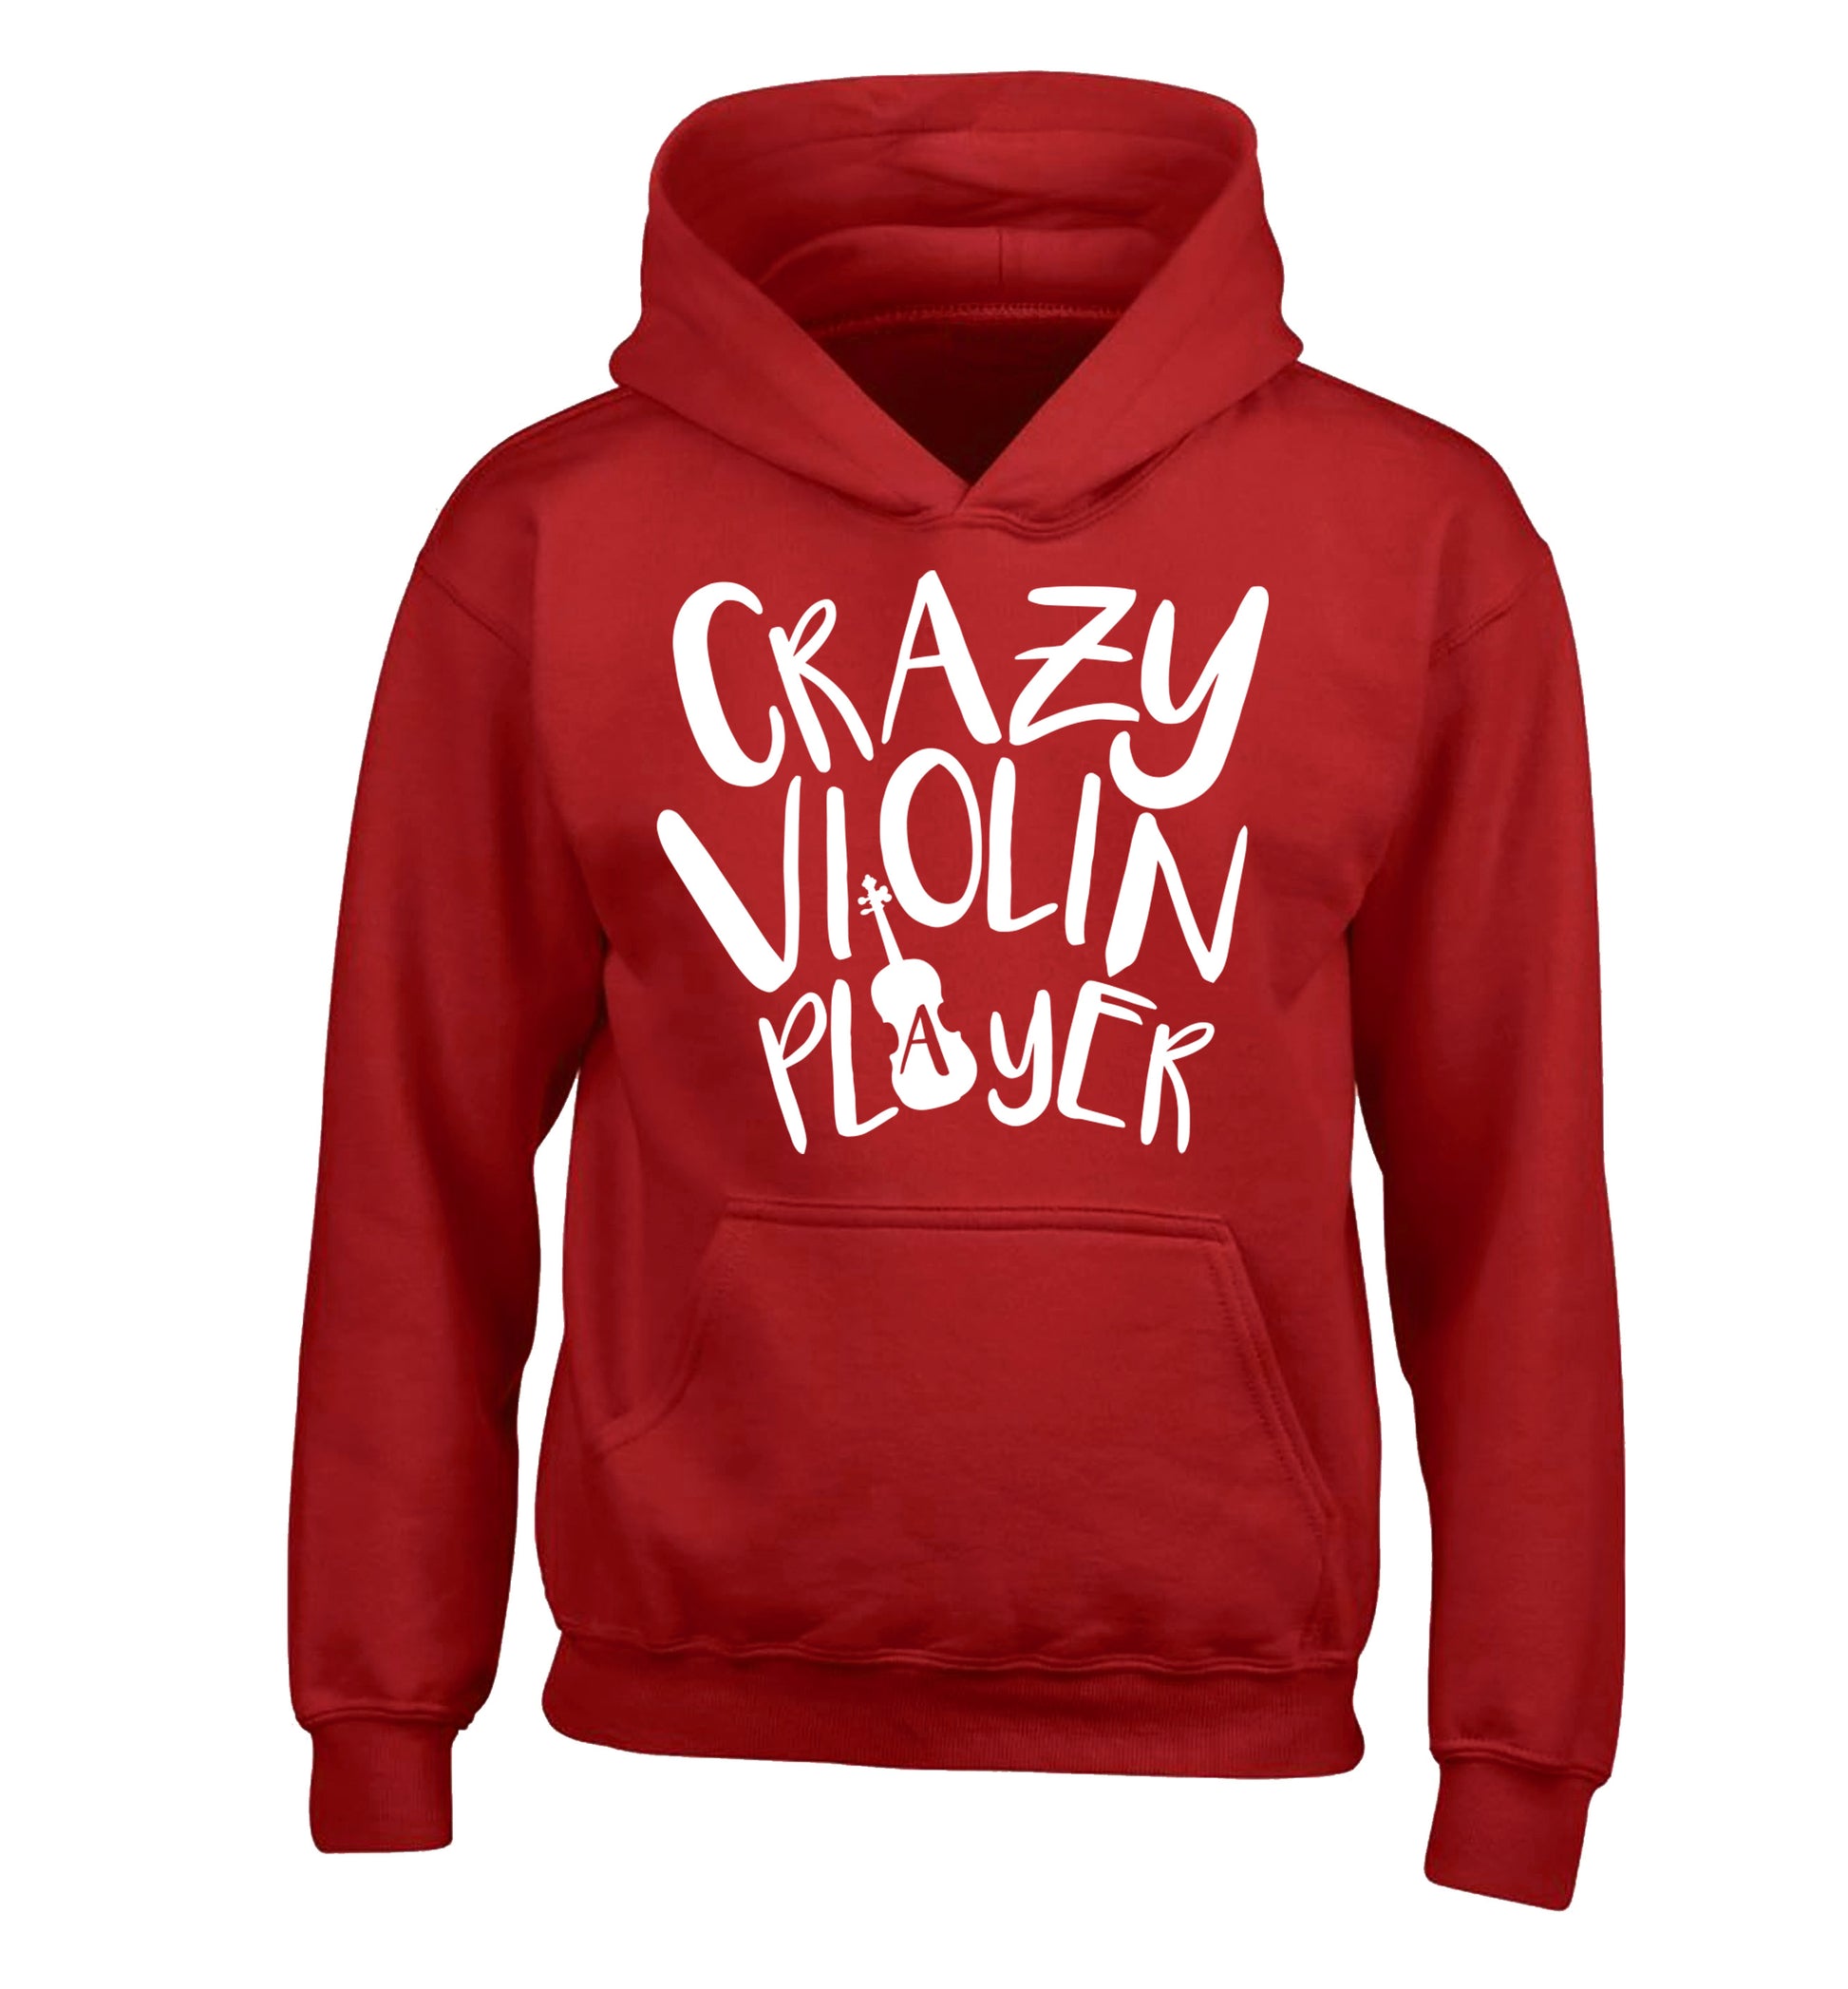 Crazy Violin Player children's red hoodie 12-13 Years